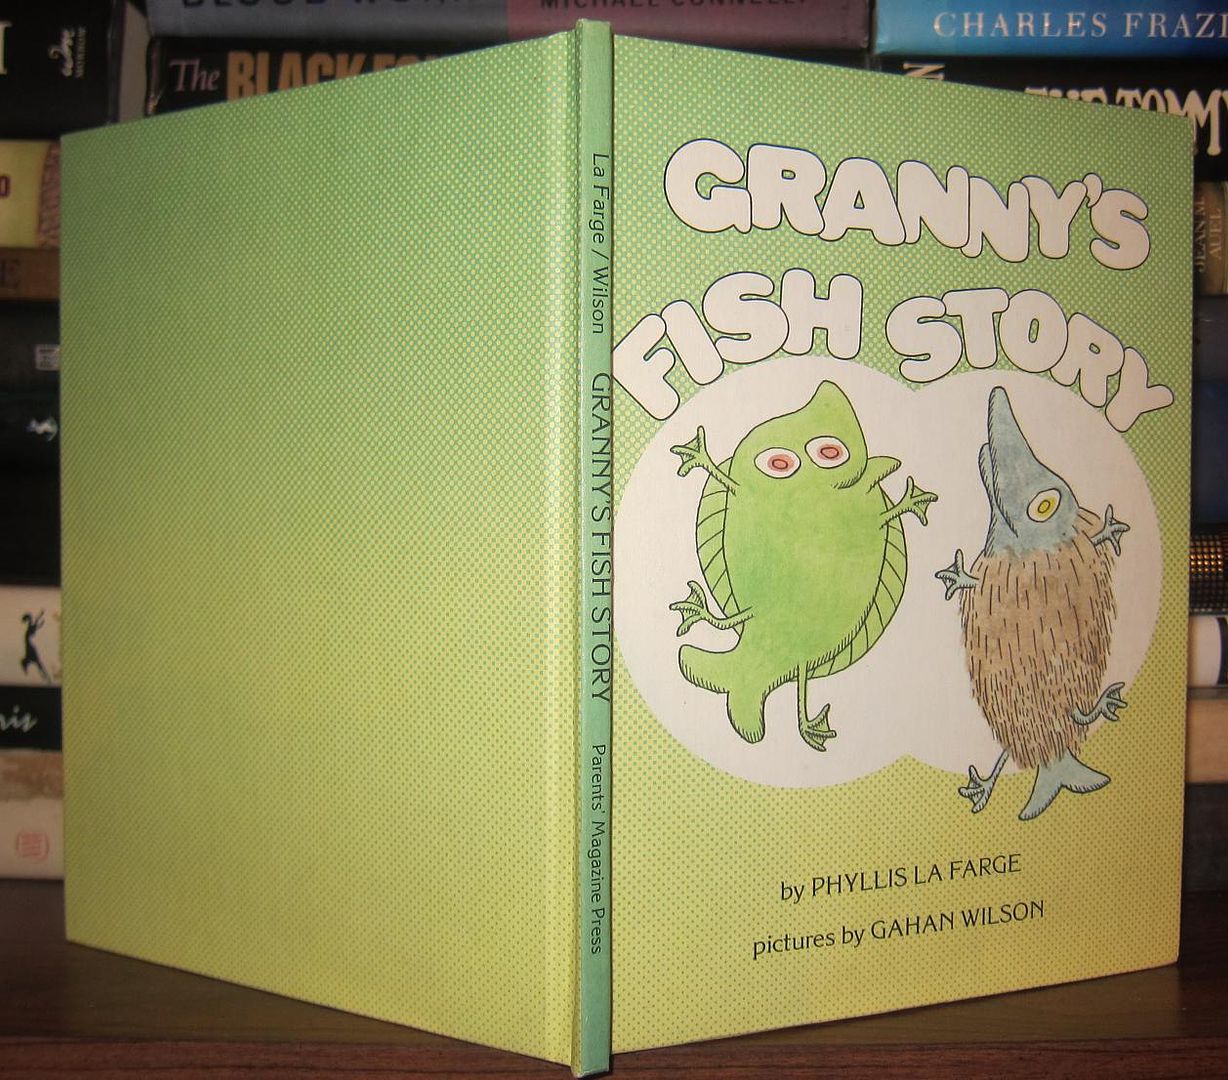 LA FARGE, PHYLLIS ; WILSON, GAHAN - Granny's Fish Story